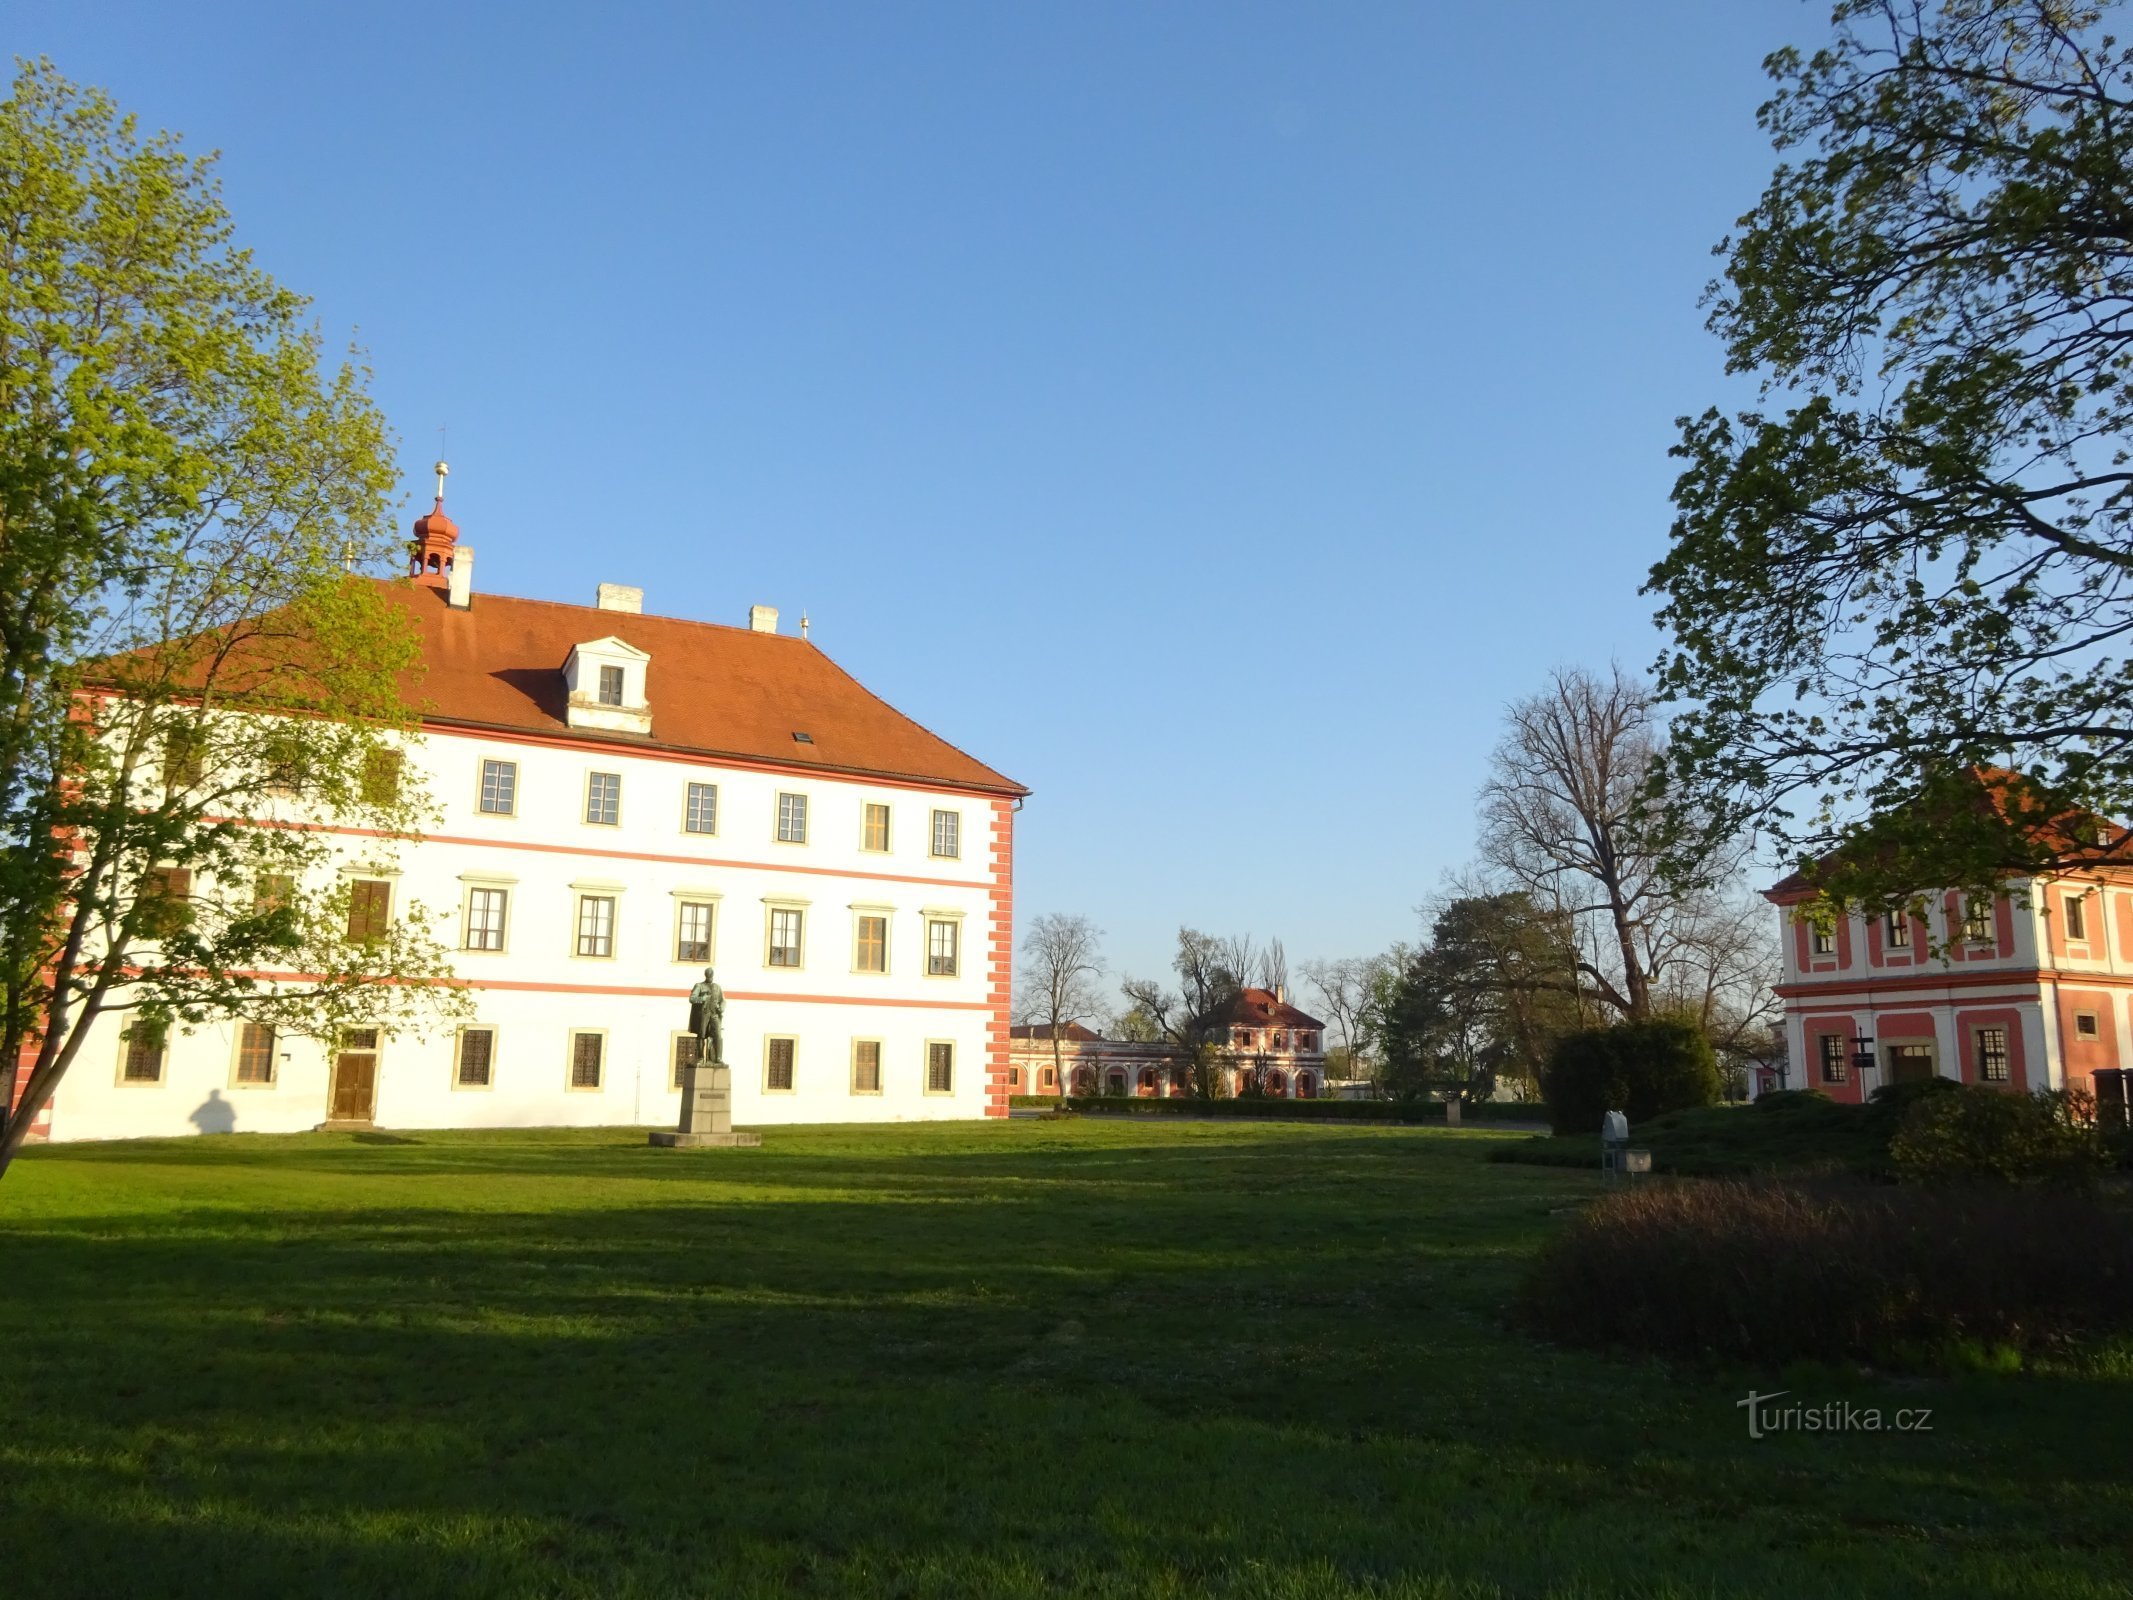 Castillo y parque del castillo de Mnichovo Hradiště